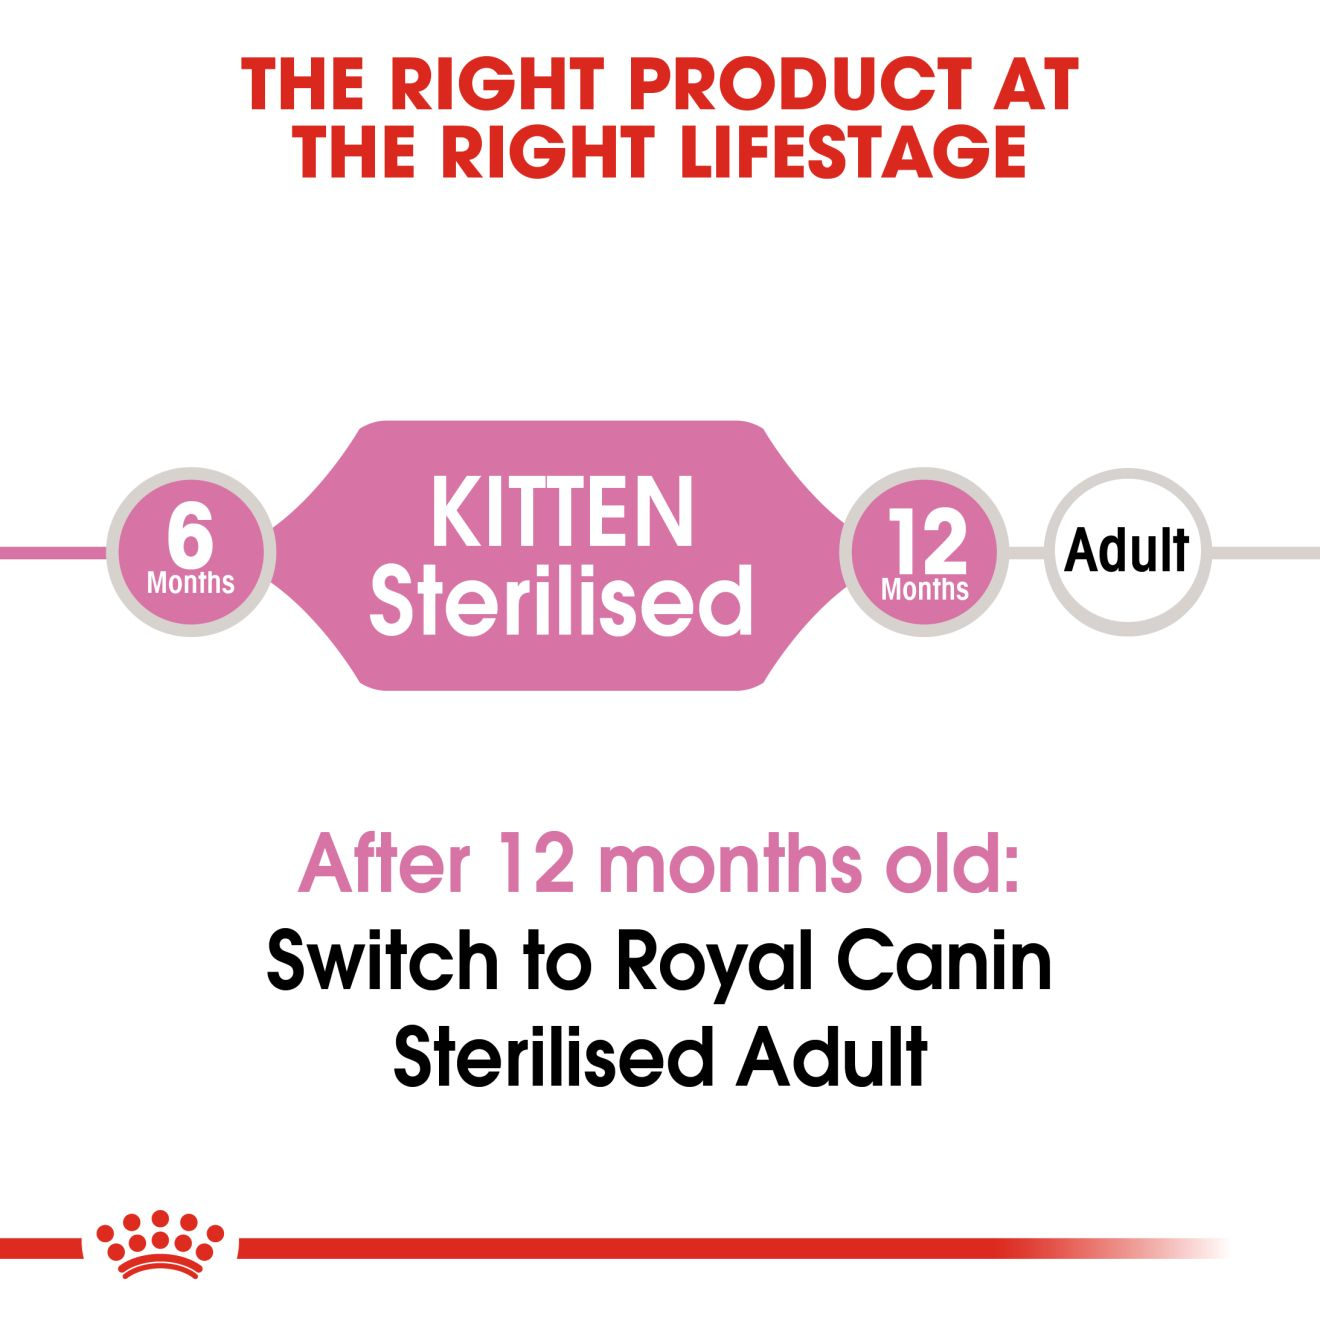 Kitten Sterilised